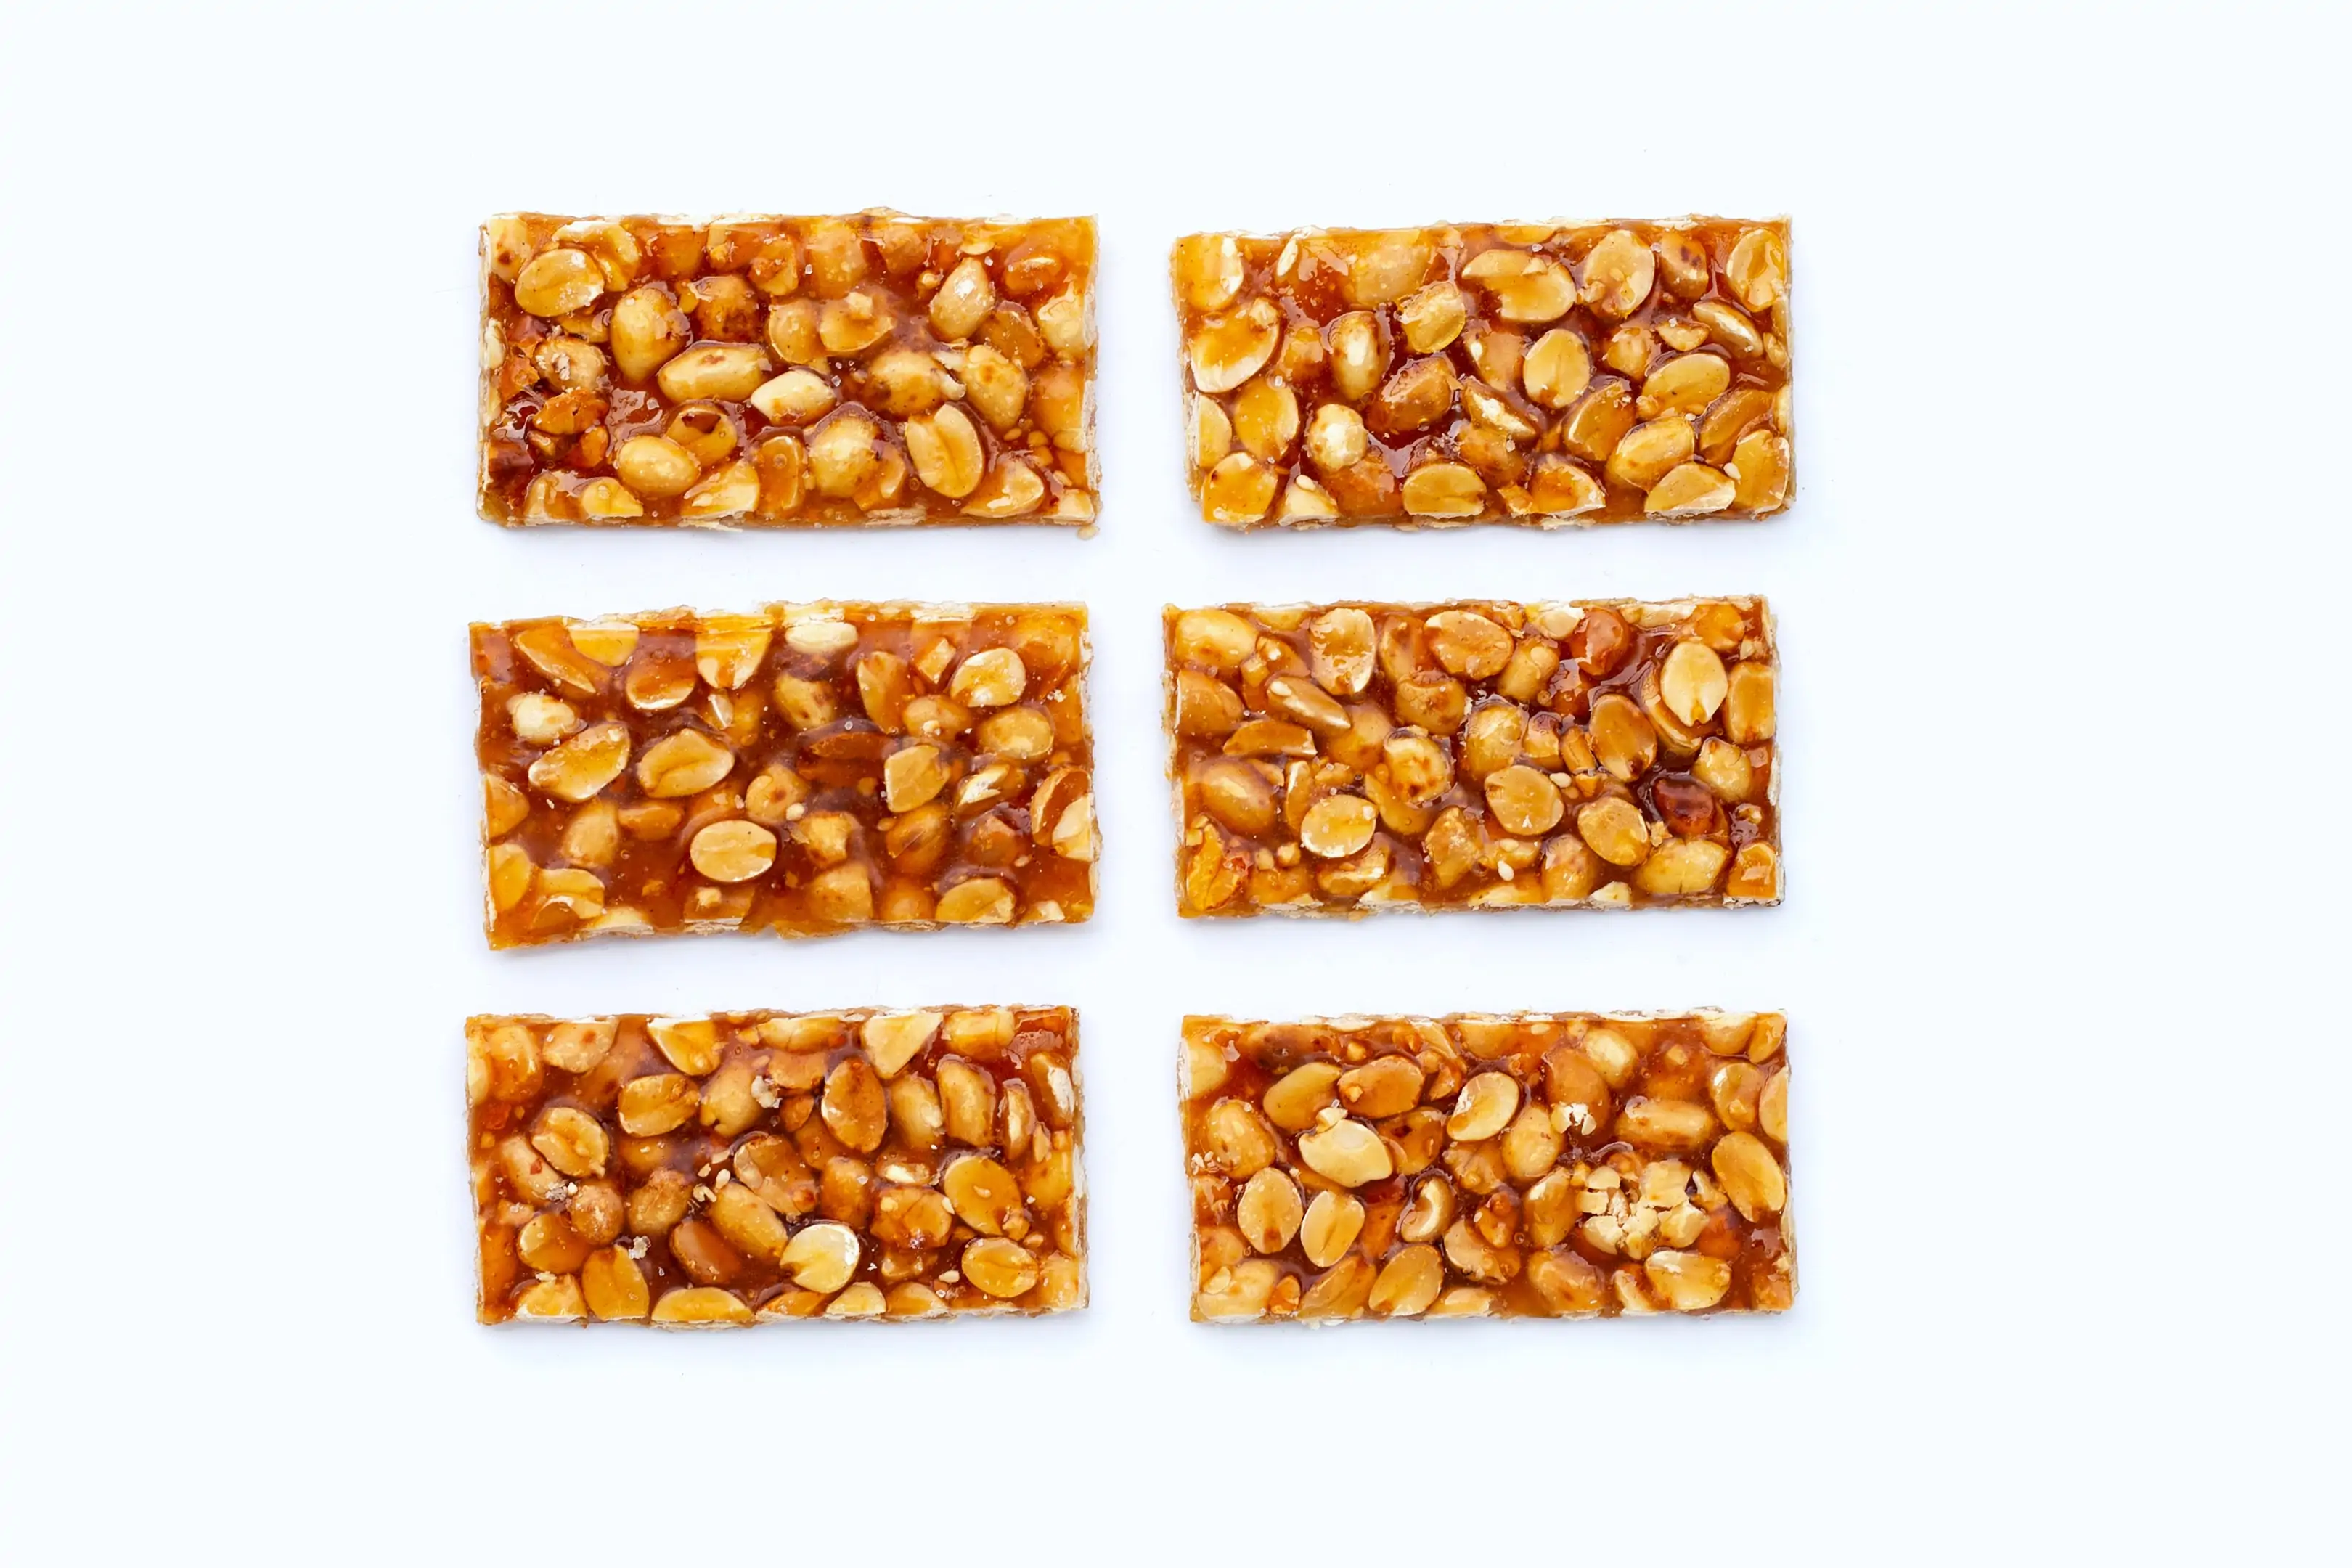 Kadalai mittai — peanuts and jaggery bars